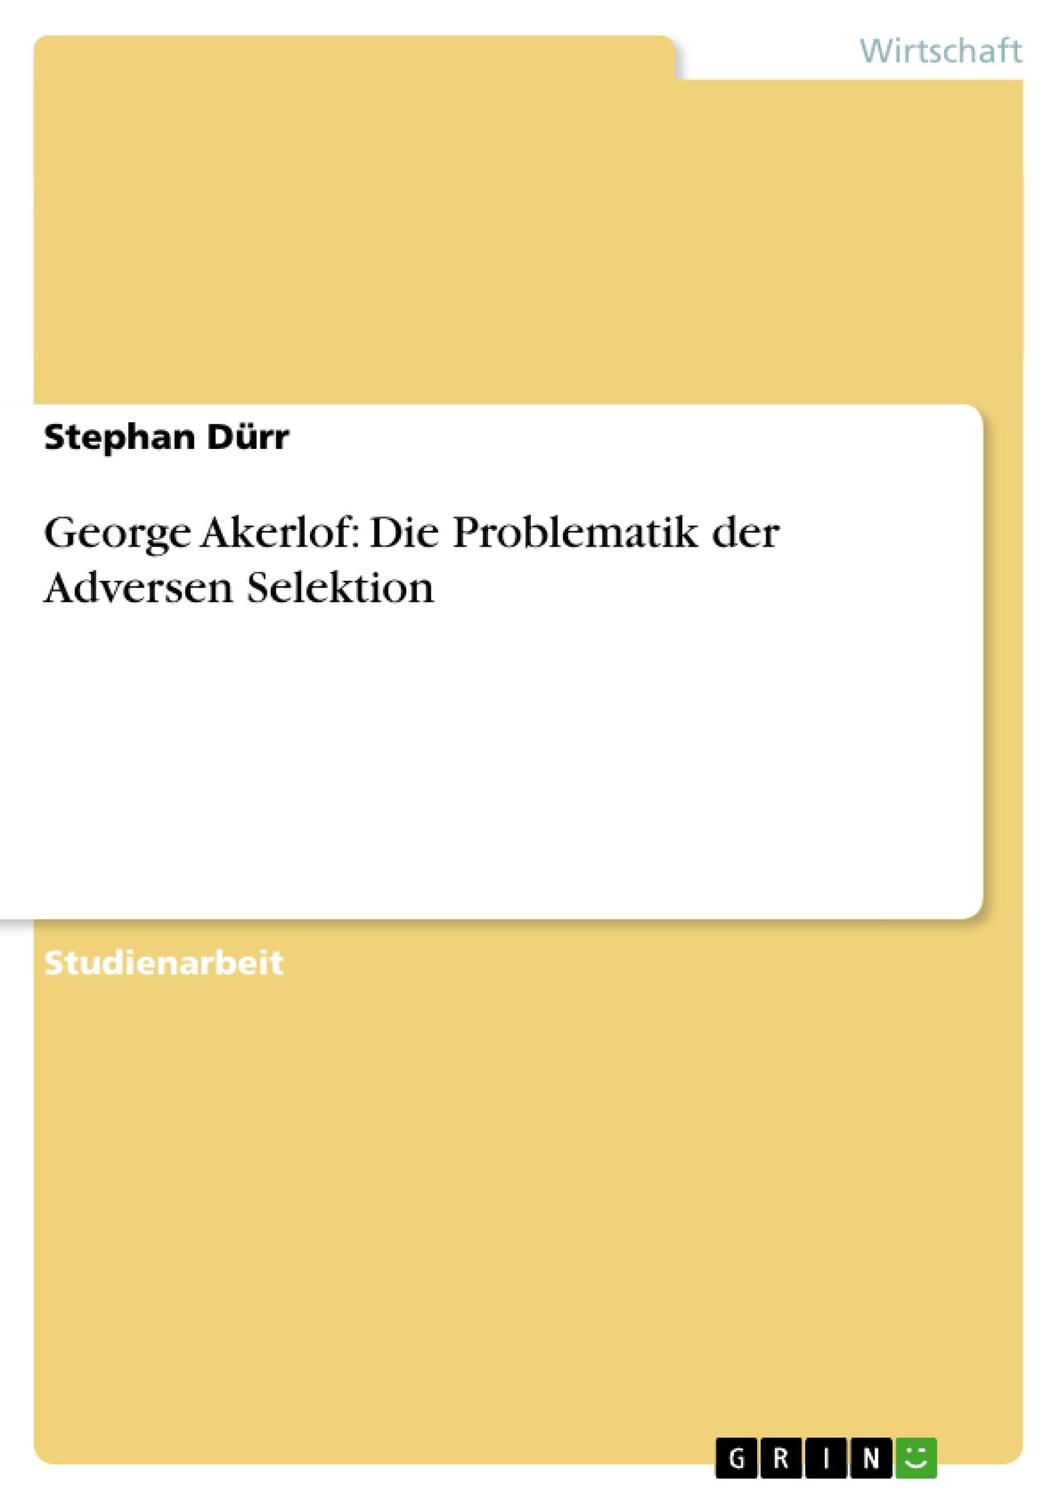 Cover: 9783638754453 | George Akerlof: Die Problematik der Adversen Selektion | Stephan Dürr